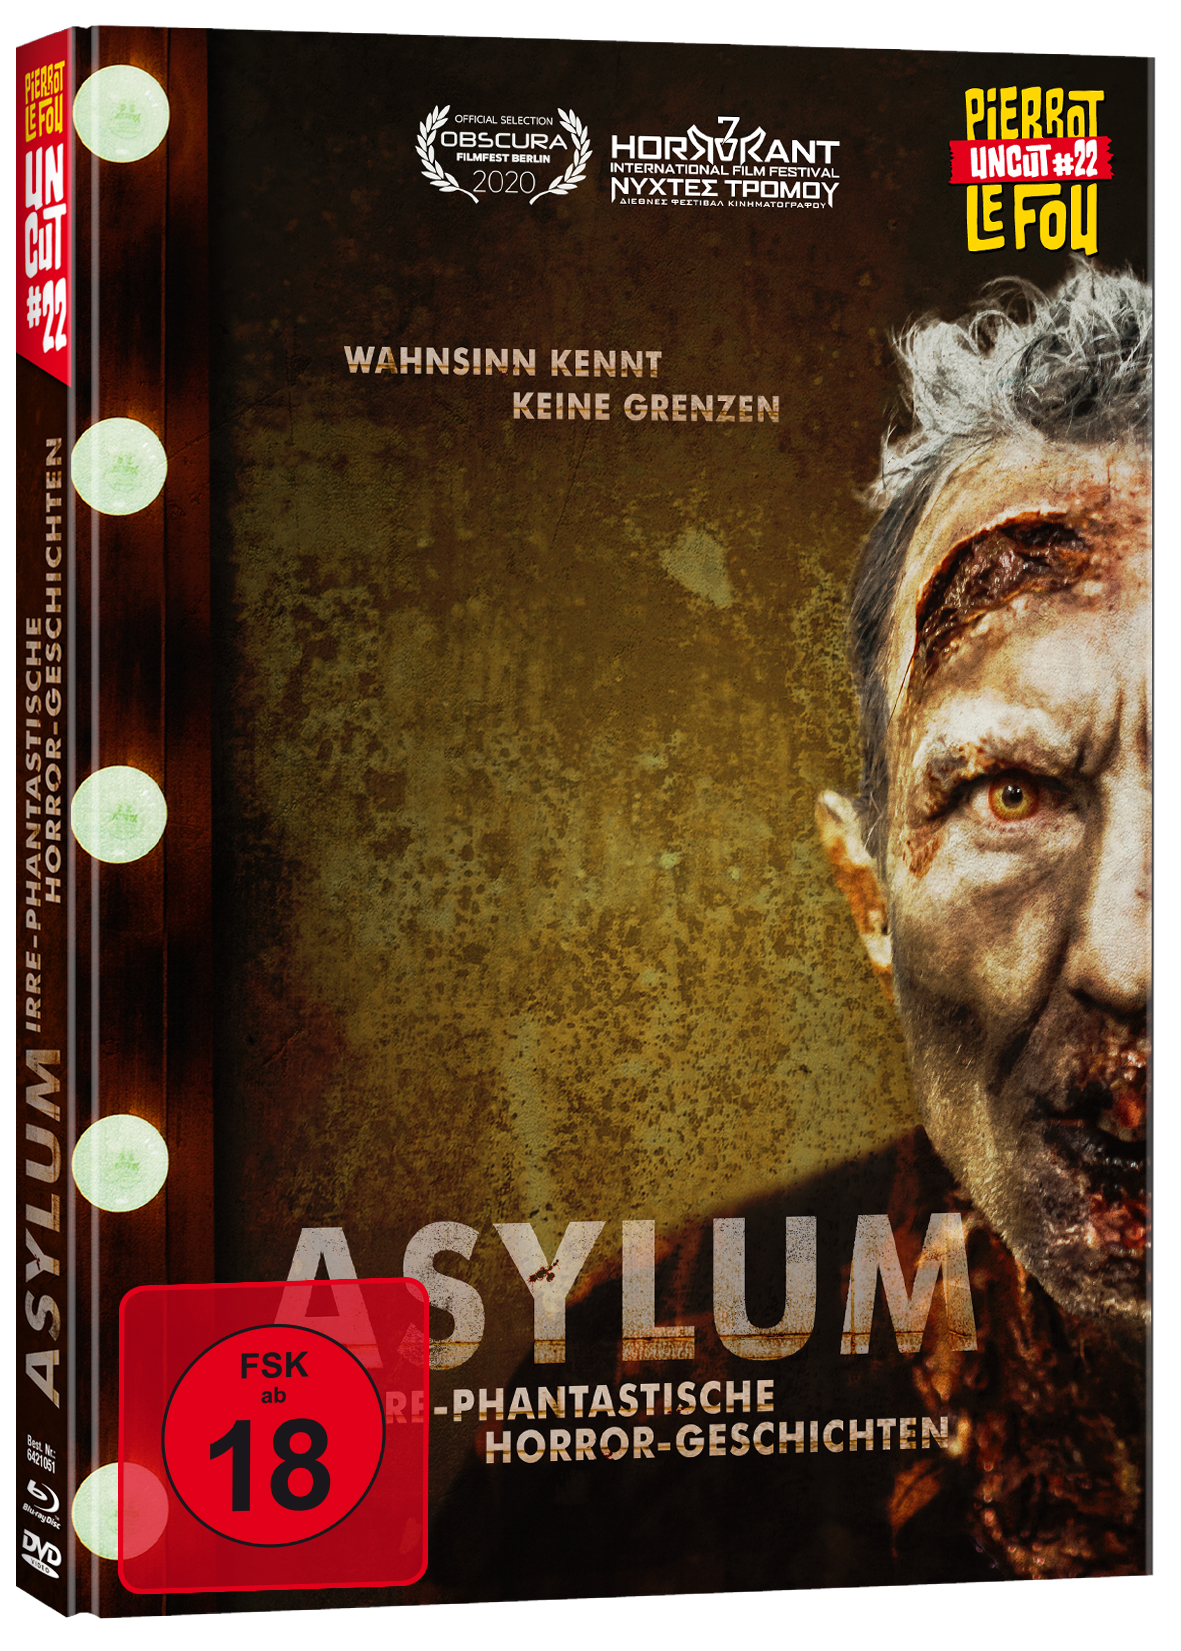 Asylum - Irre-phantastische Horror-Geschichten - Limited Edition Mediabook (uncut) (Blu-ray + DVD) - Cover B